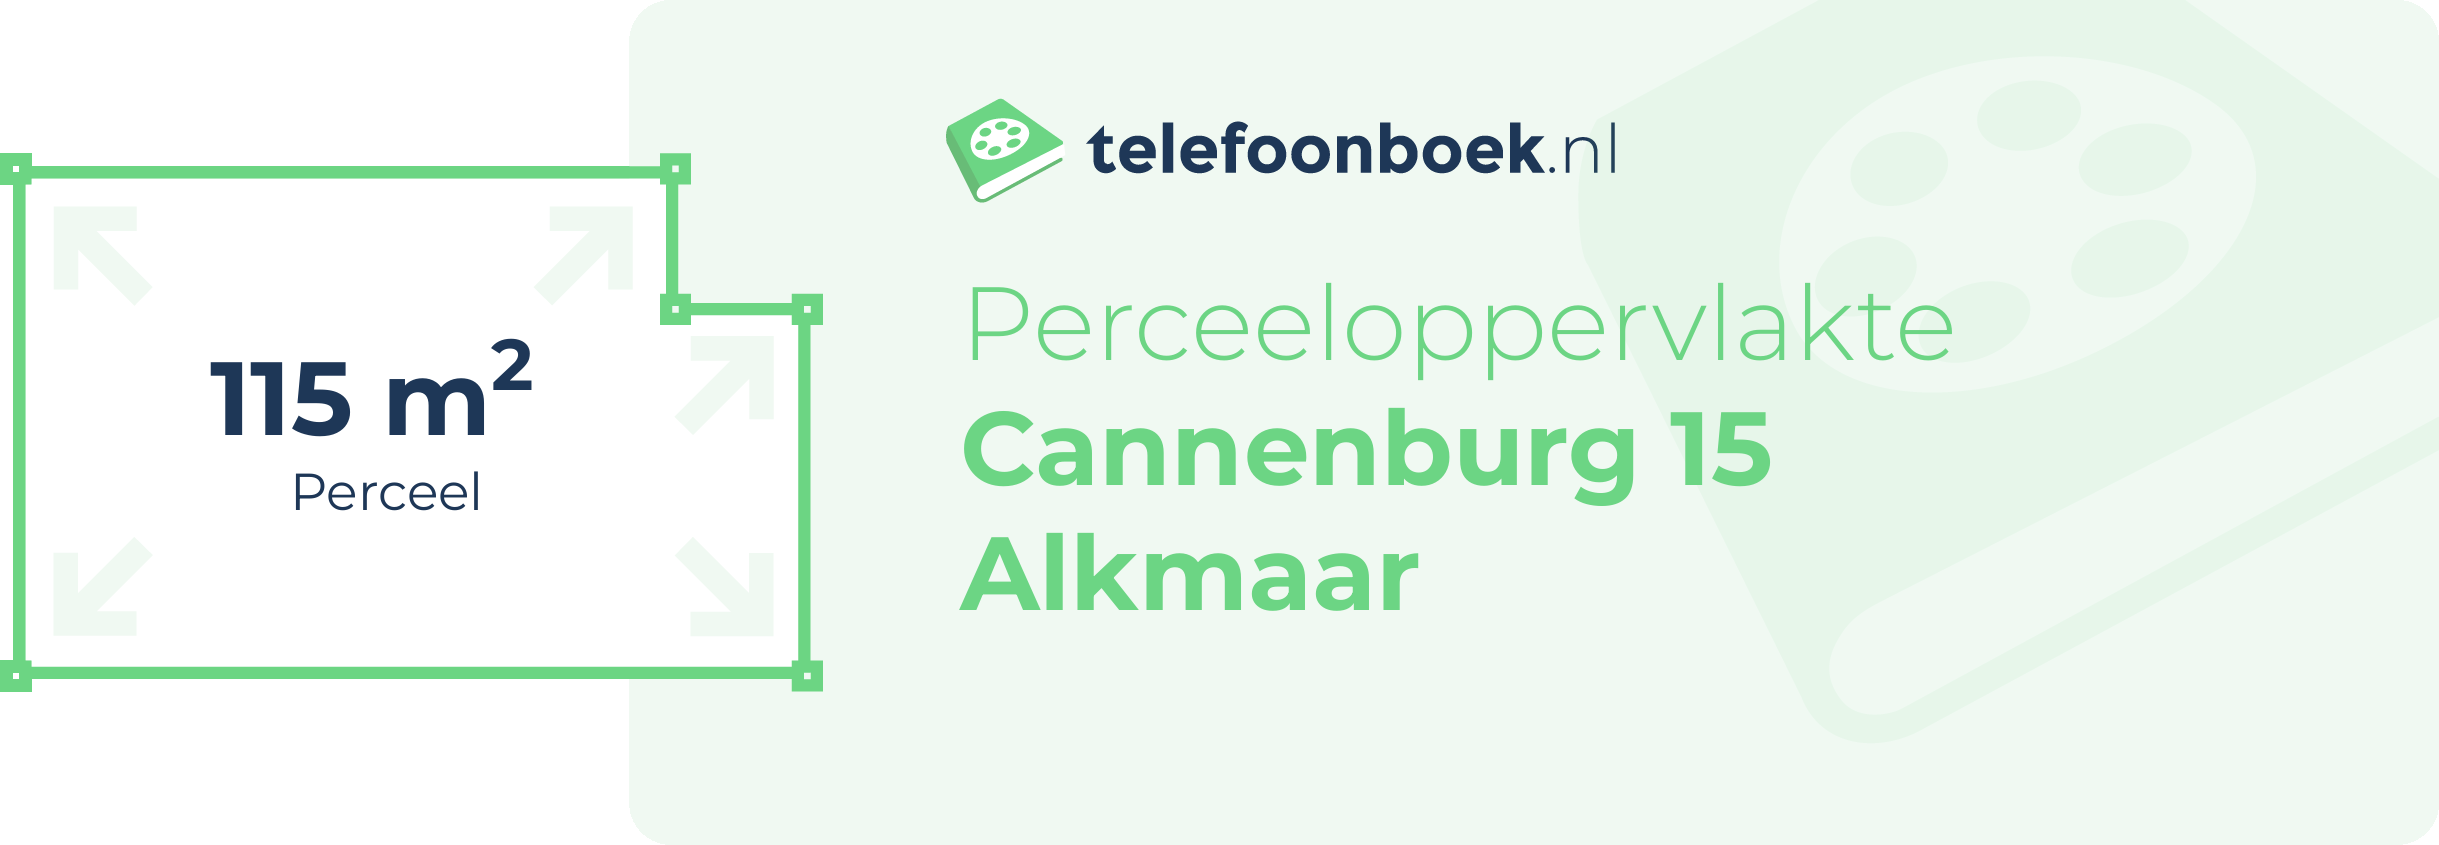 Perceeloppervlakte Cannenburg 15 Alkmaar